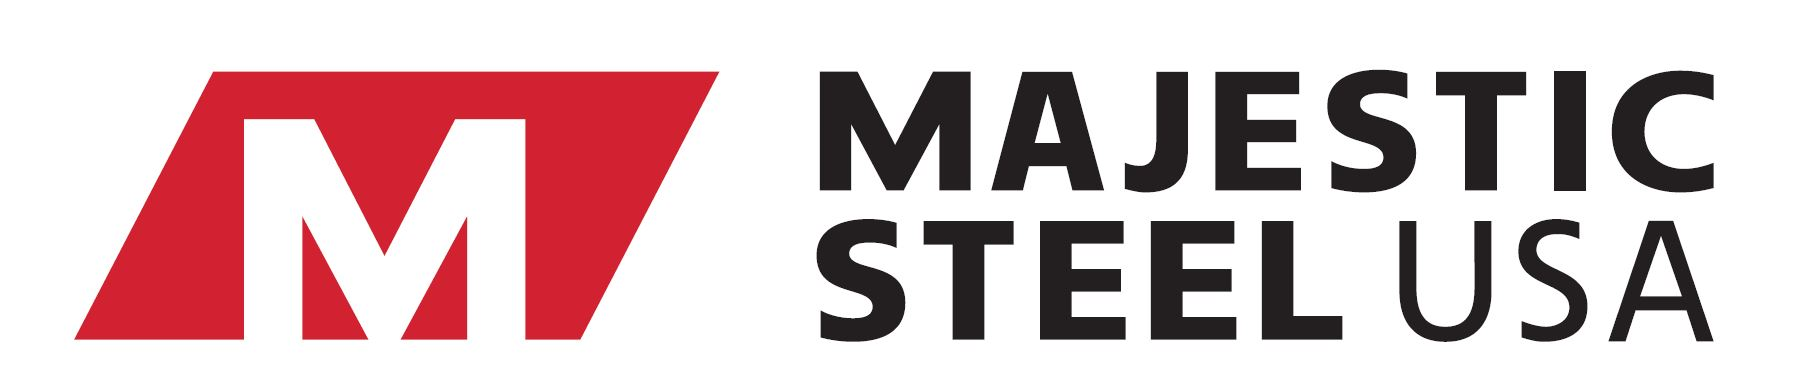 Majestic Steel USA Company Logo